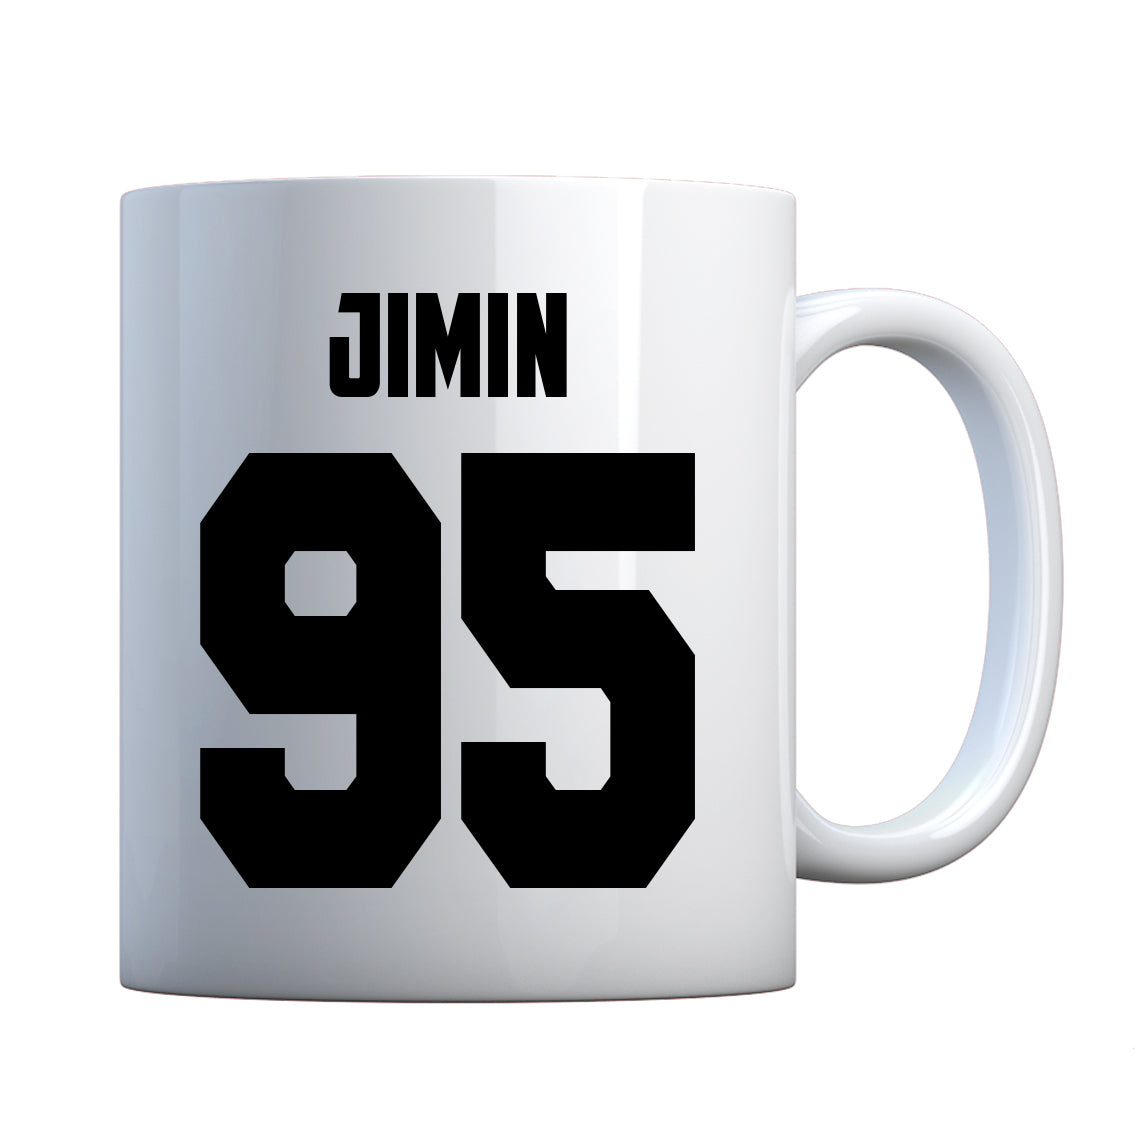 Jimin 95 Ceramic Gift Mug